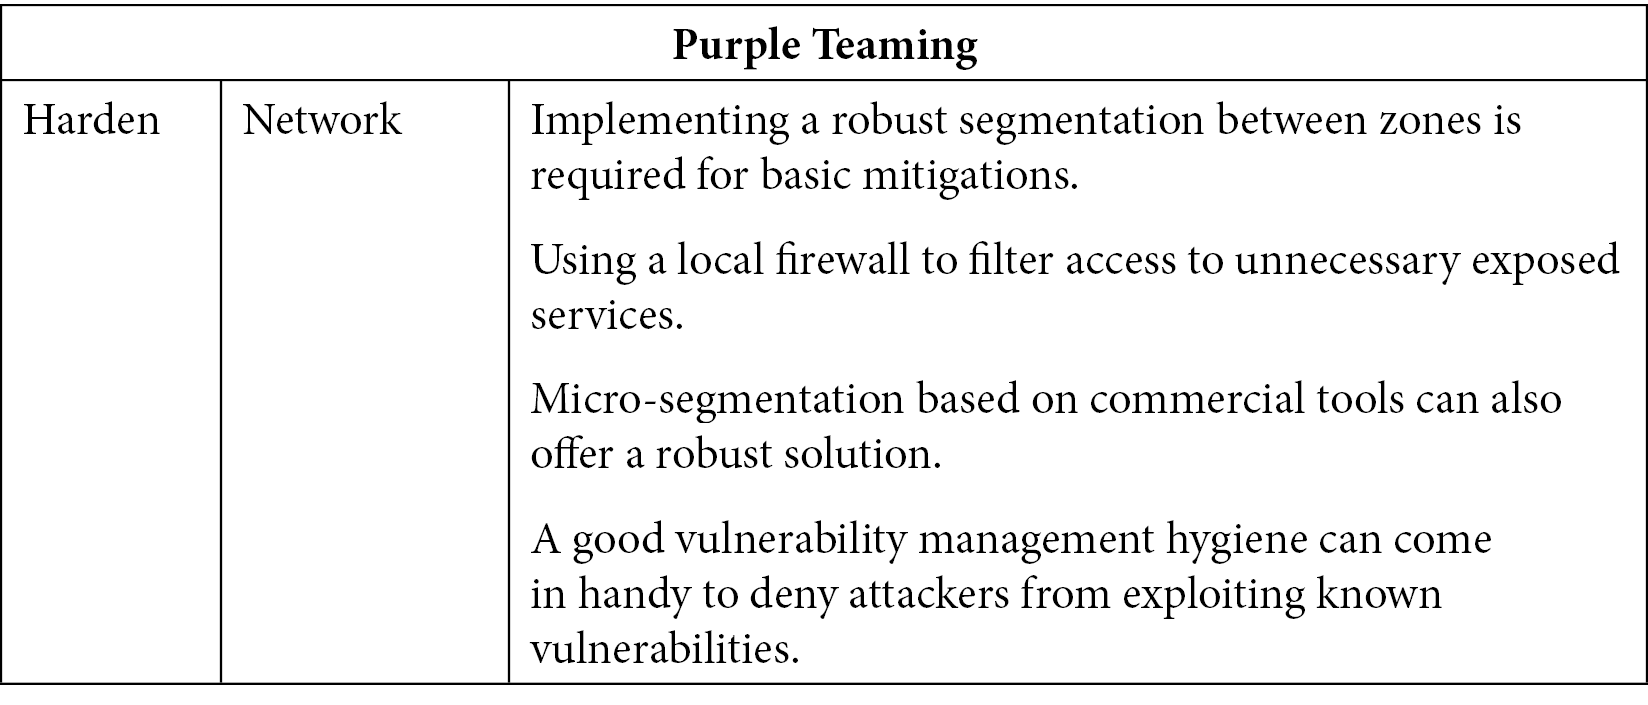 Table 10.15 – Purple Teaming T1046
